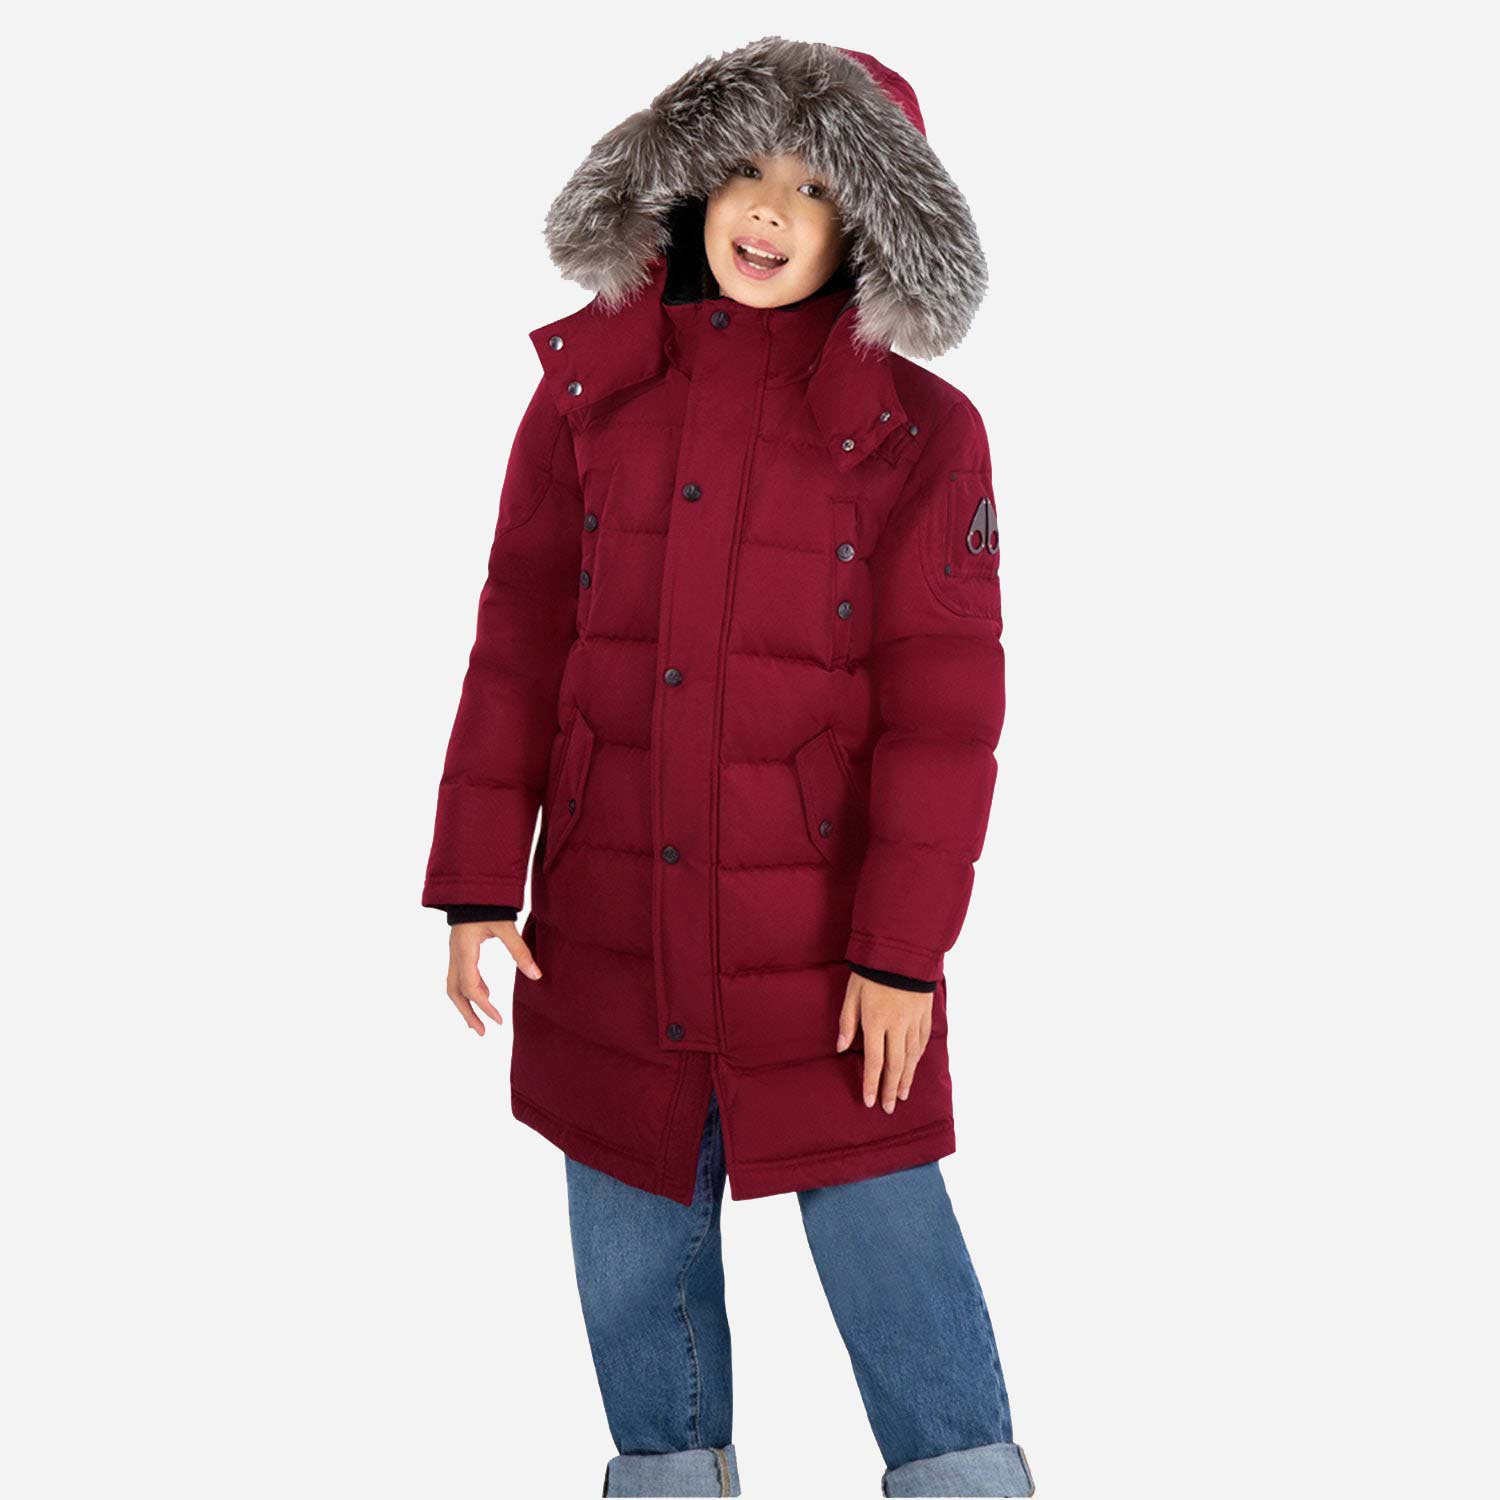 Moose Knuckles Kid's Parka Jacket - Color: Comet Red/Frost Fox Fur, BLACK/FROST FOX FUR - Kids Premium Clothing -